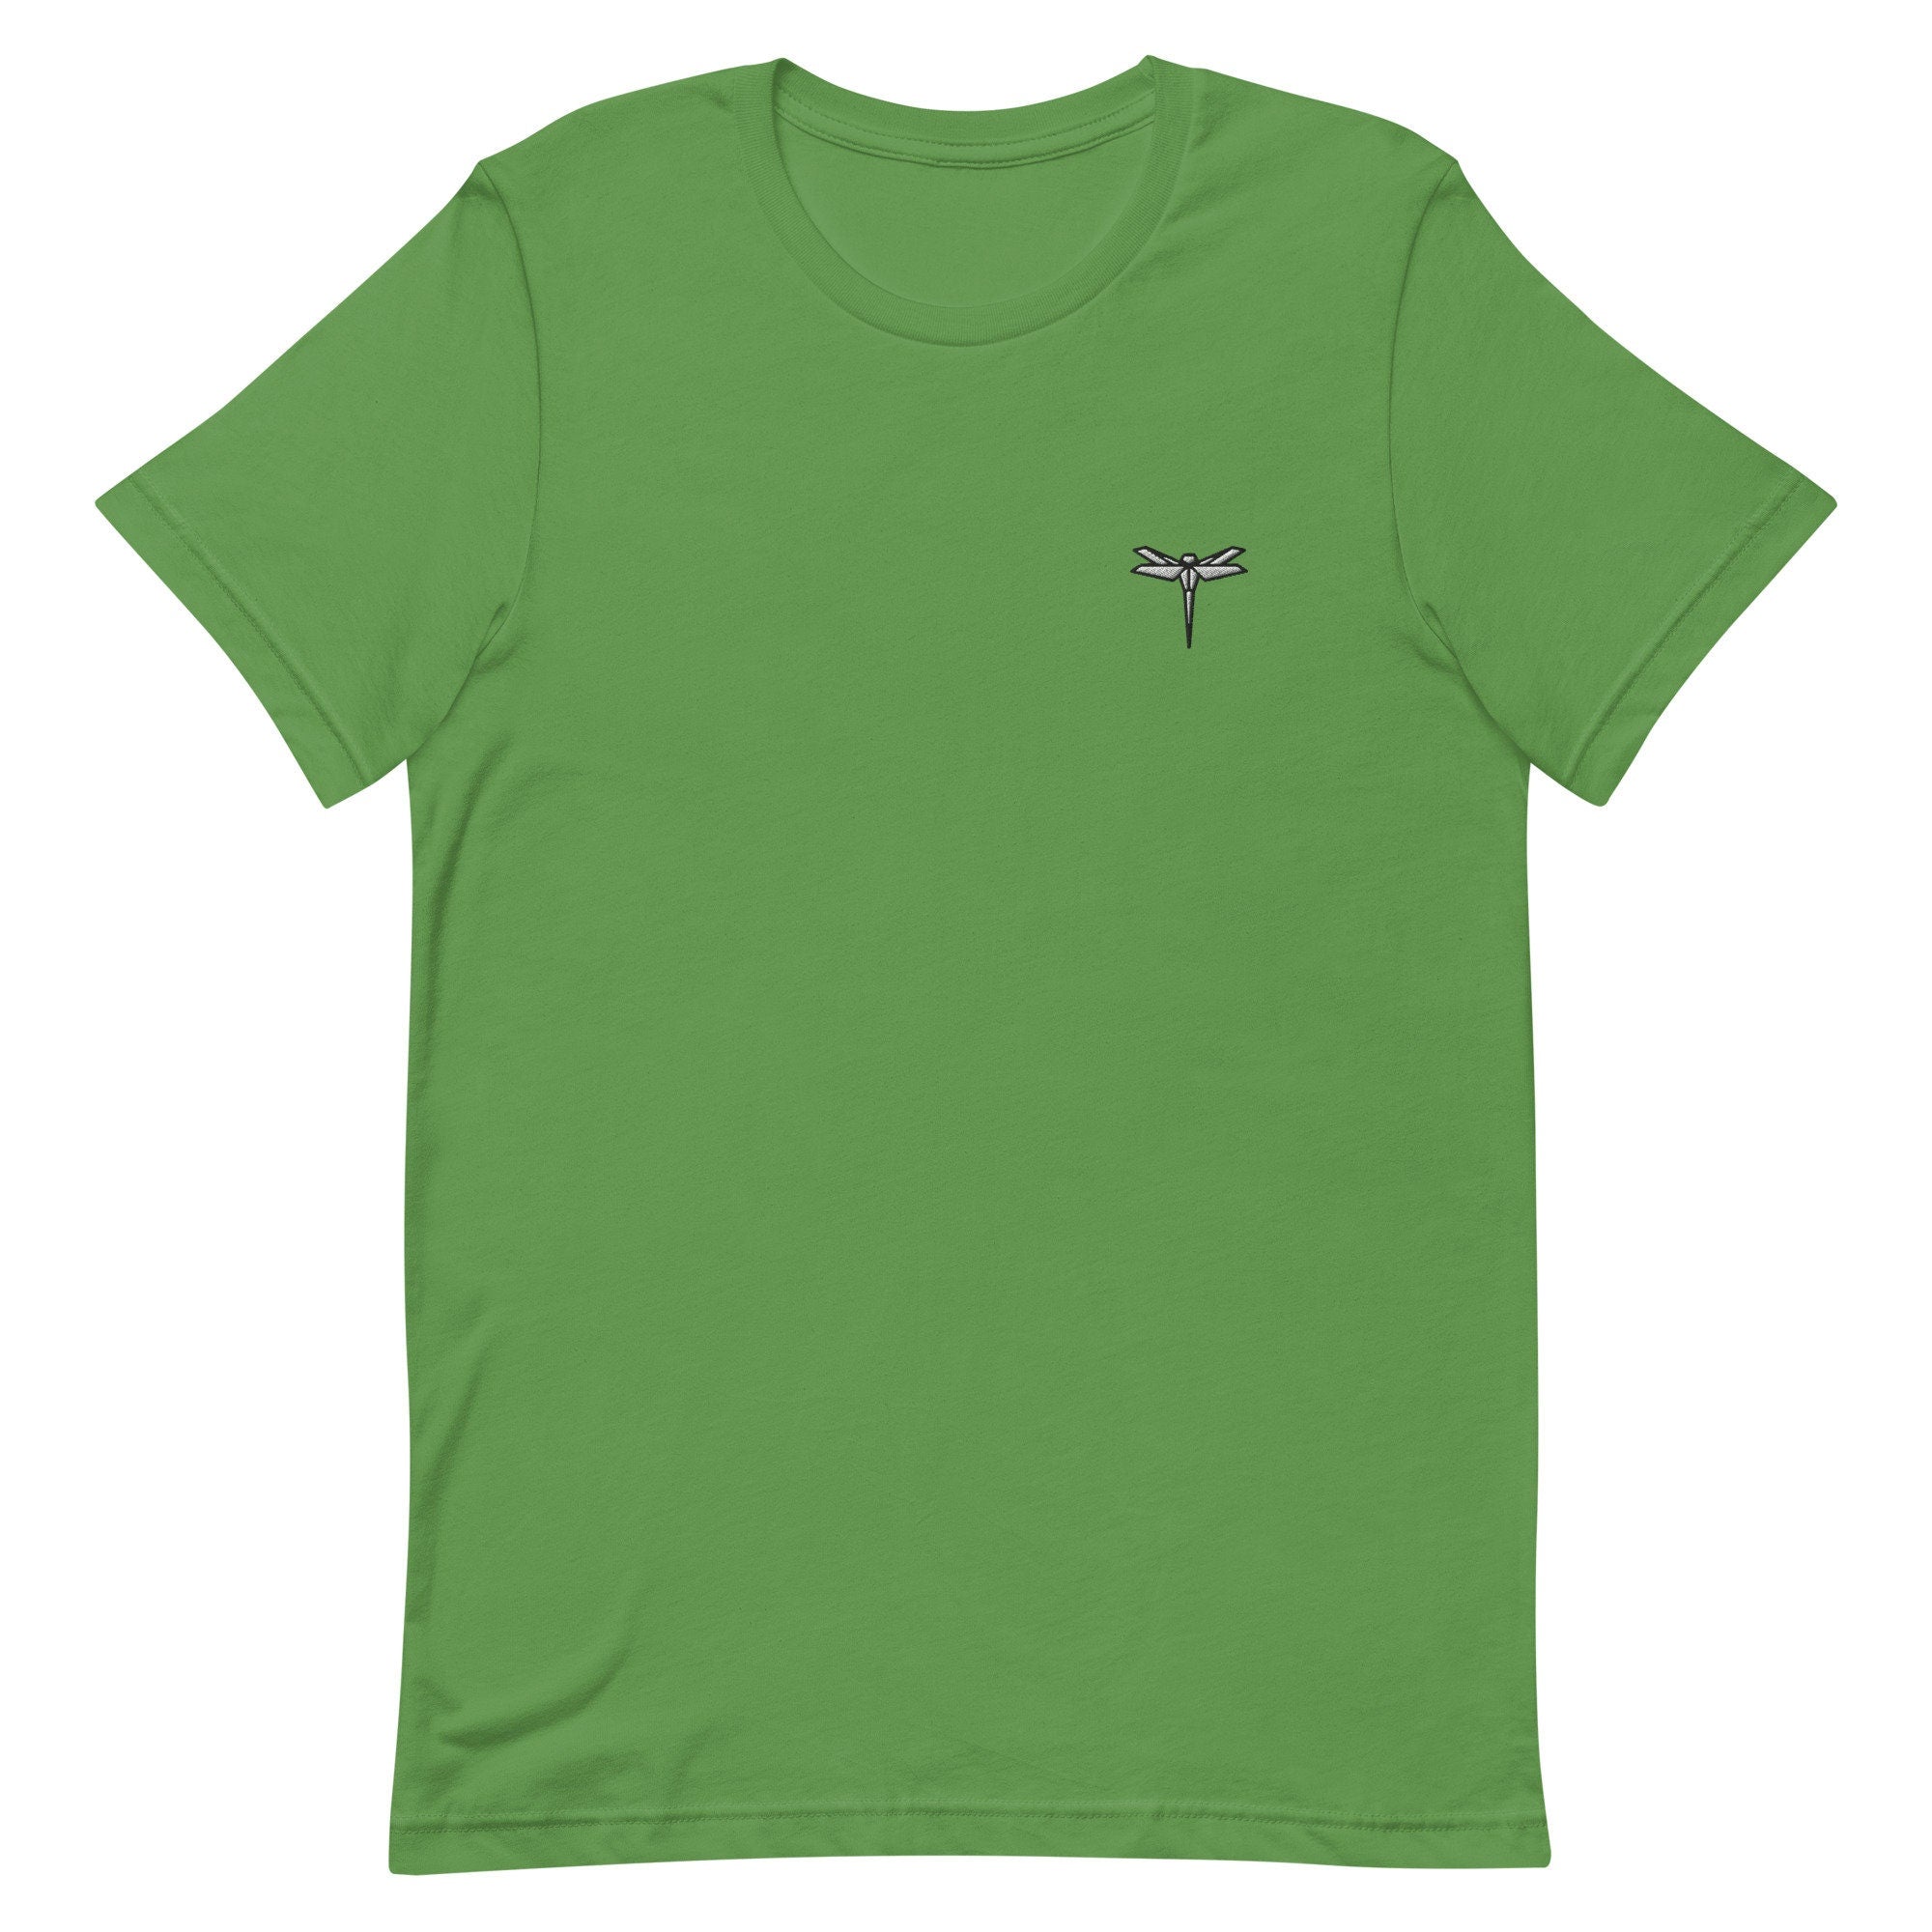 Origami Dragonfly Premium Men's T-Shirt, Embroidered Men's T-Shirt Gift for Boyfriend, Men's Short Sleeve Shirt - Multiple Colors